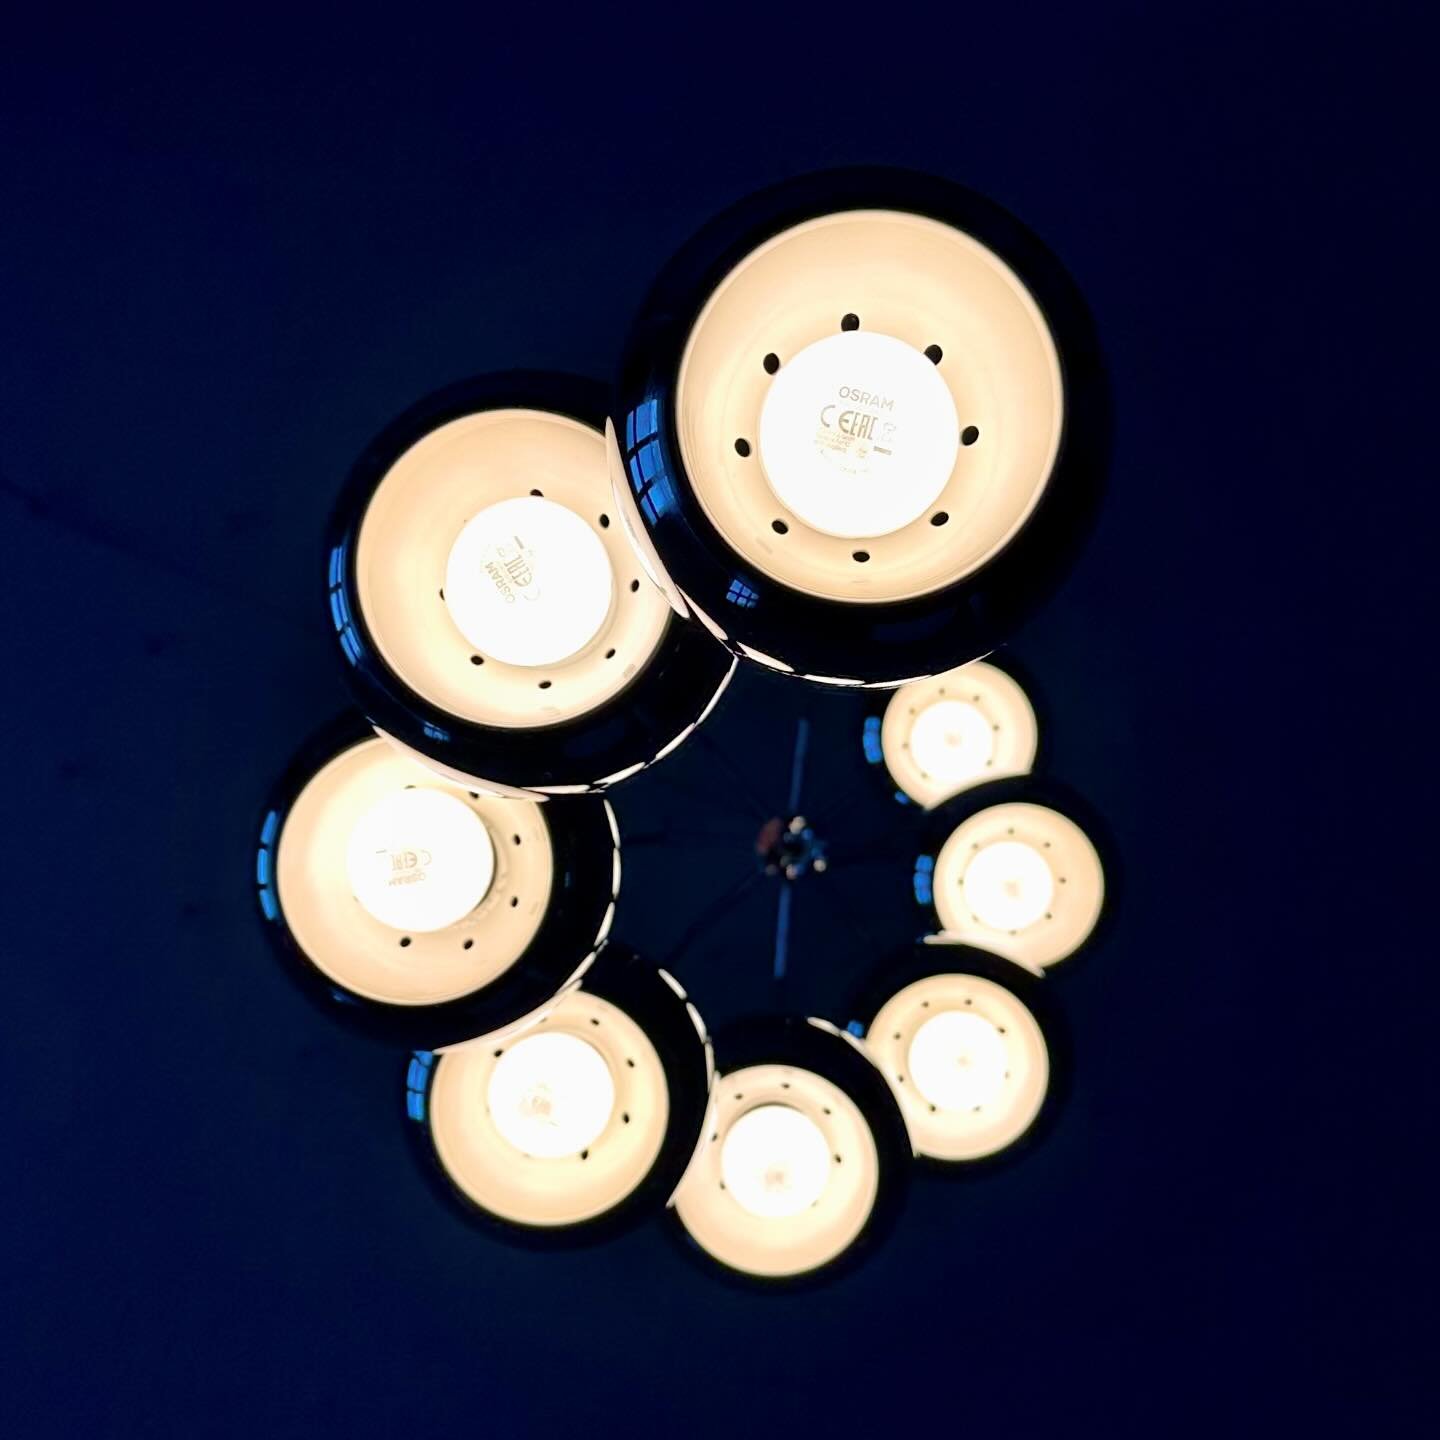 Kaskadenlampe in Chrom

680 Chf
L145 D35

#studiovintagezurich #vintage #zurich #z&uuml;rich #z&uuml;ri #midcenturymodern #schweiz #swiss #switzerland #midcenturymodernfurniture #vintagefurniture #uetikonamsee #uetikon #chemieuetikon #goldk&uuml;ste 